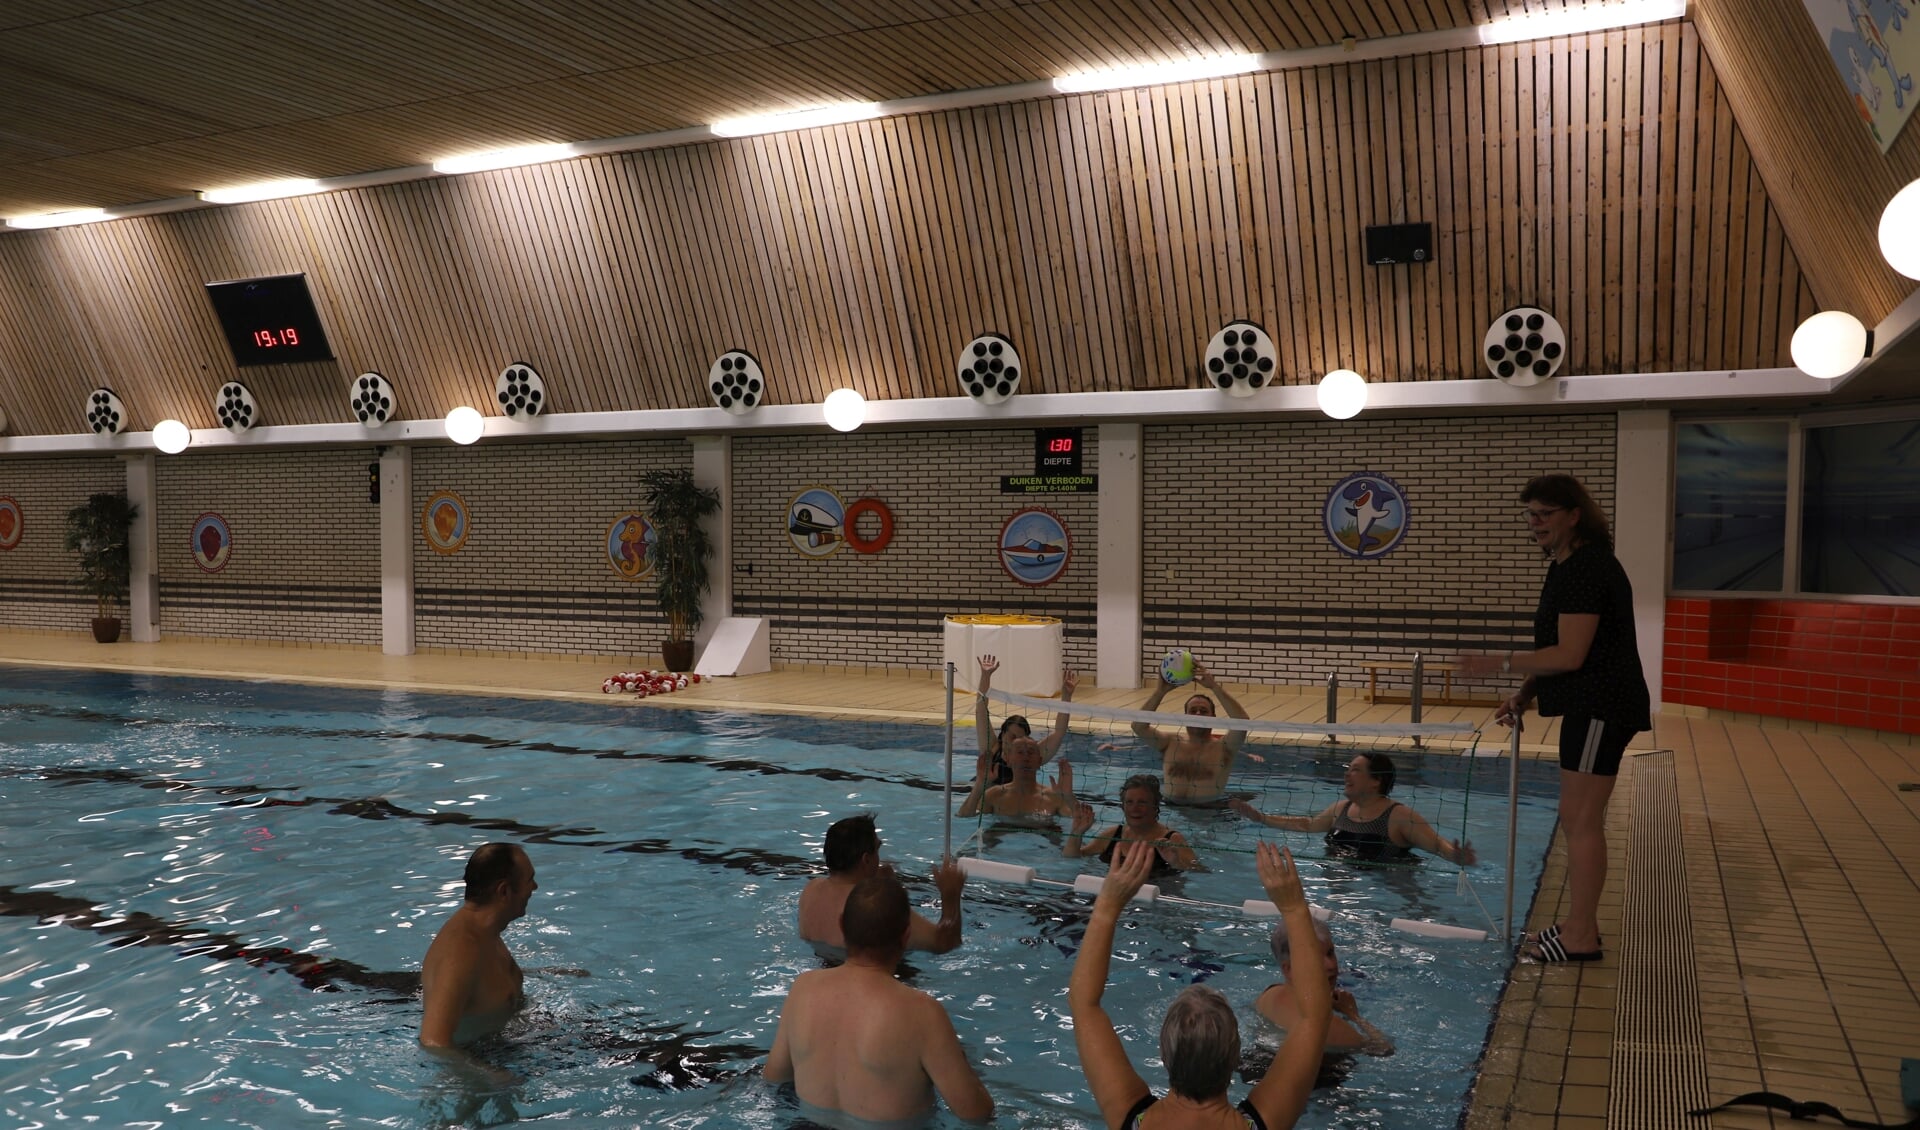 Zwemmen in Varsseveld. Foto: PR